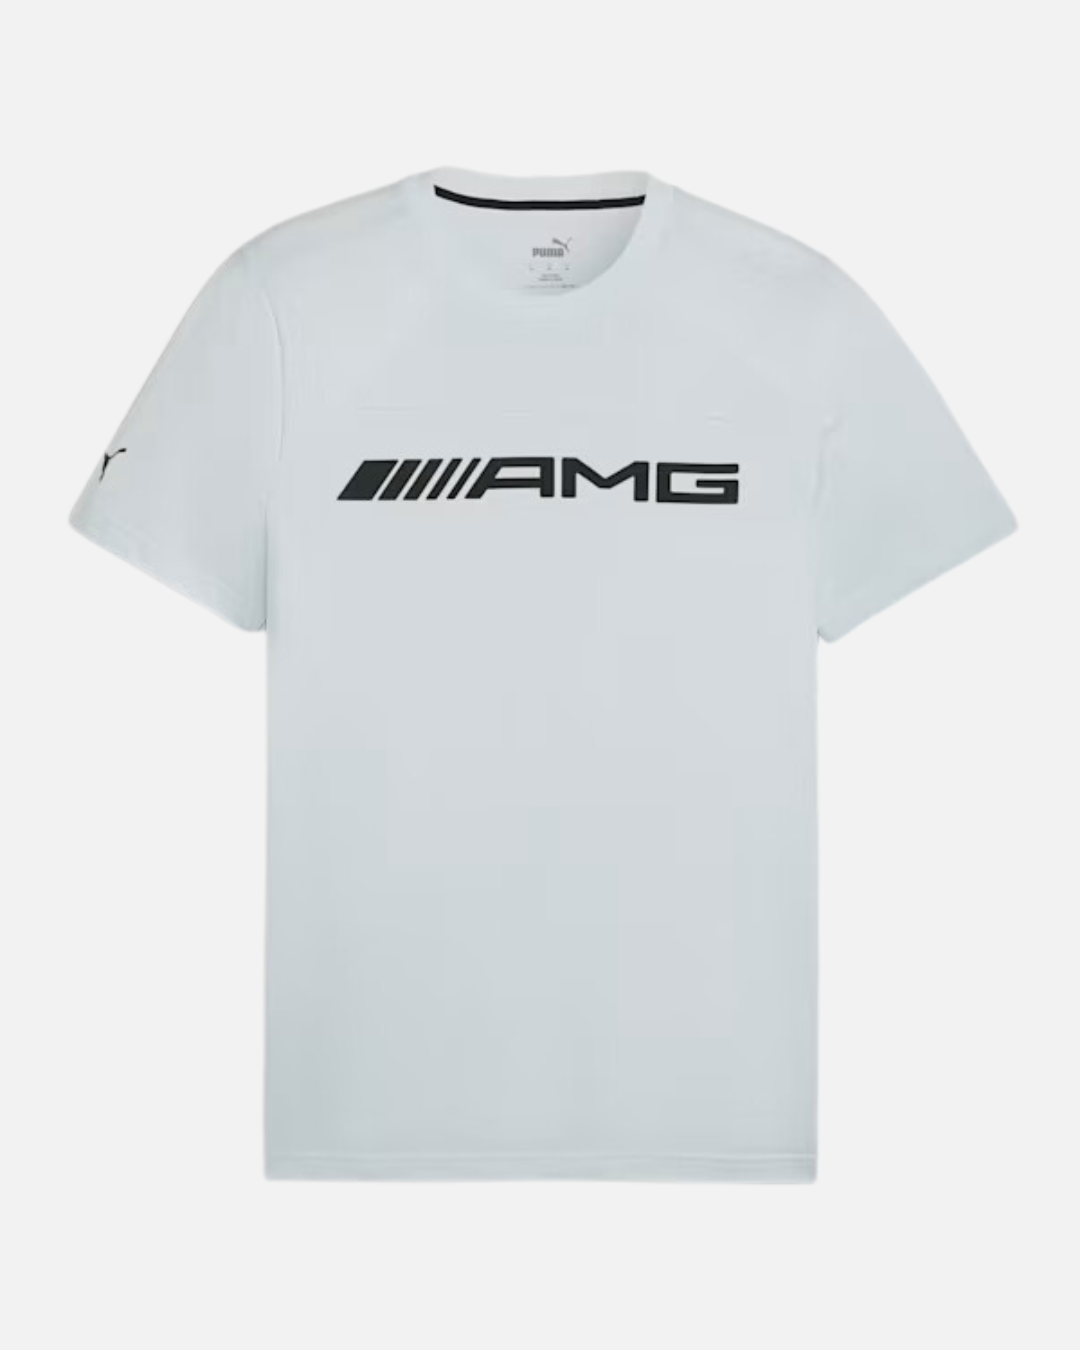 Mercedes-AMG Motorsport T-shirt - Grey/Black